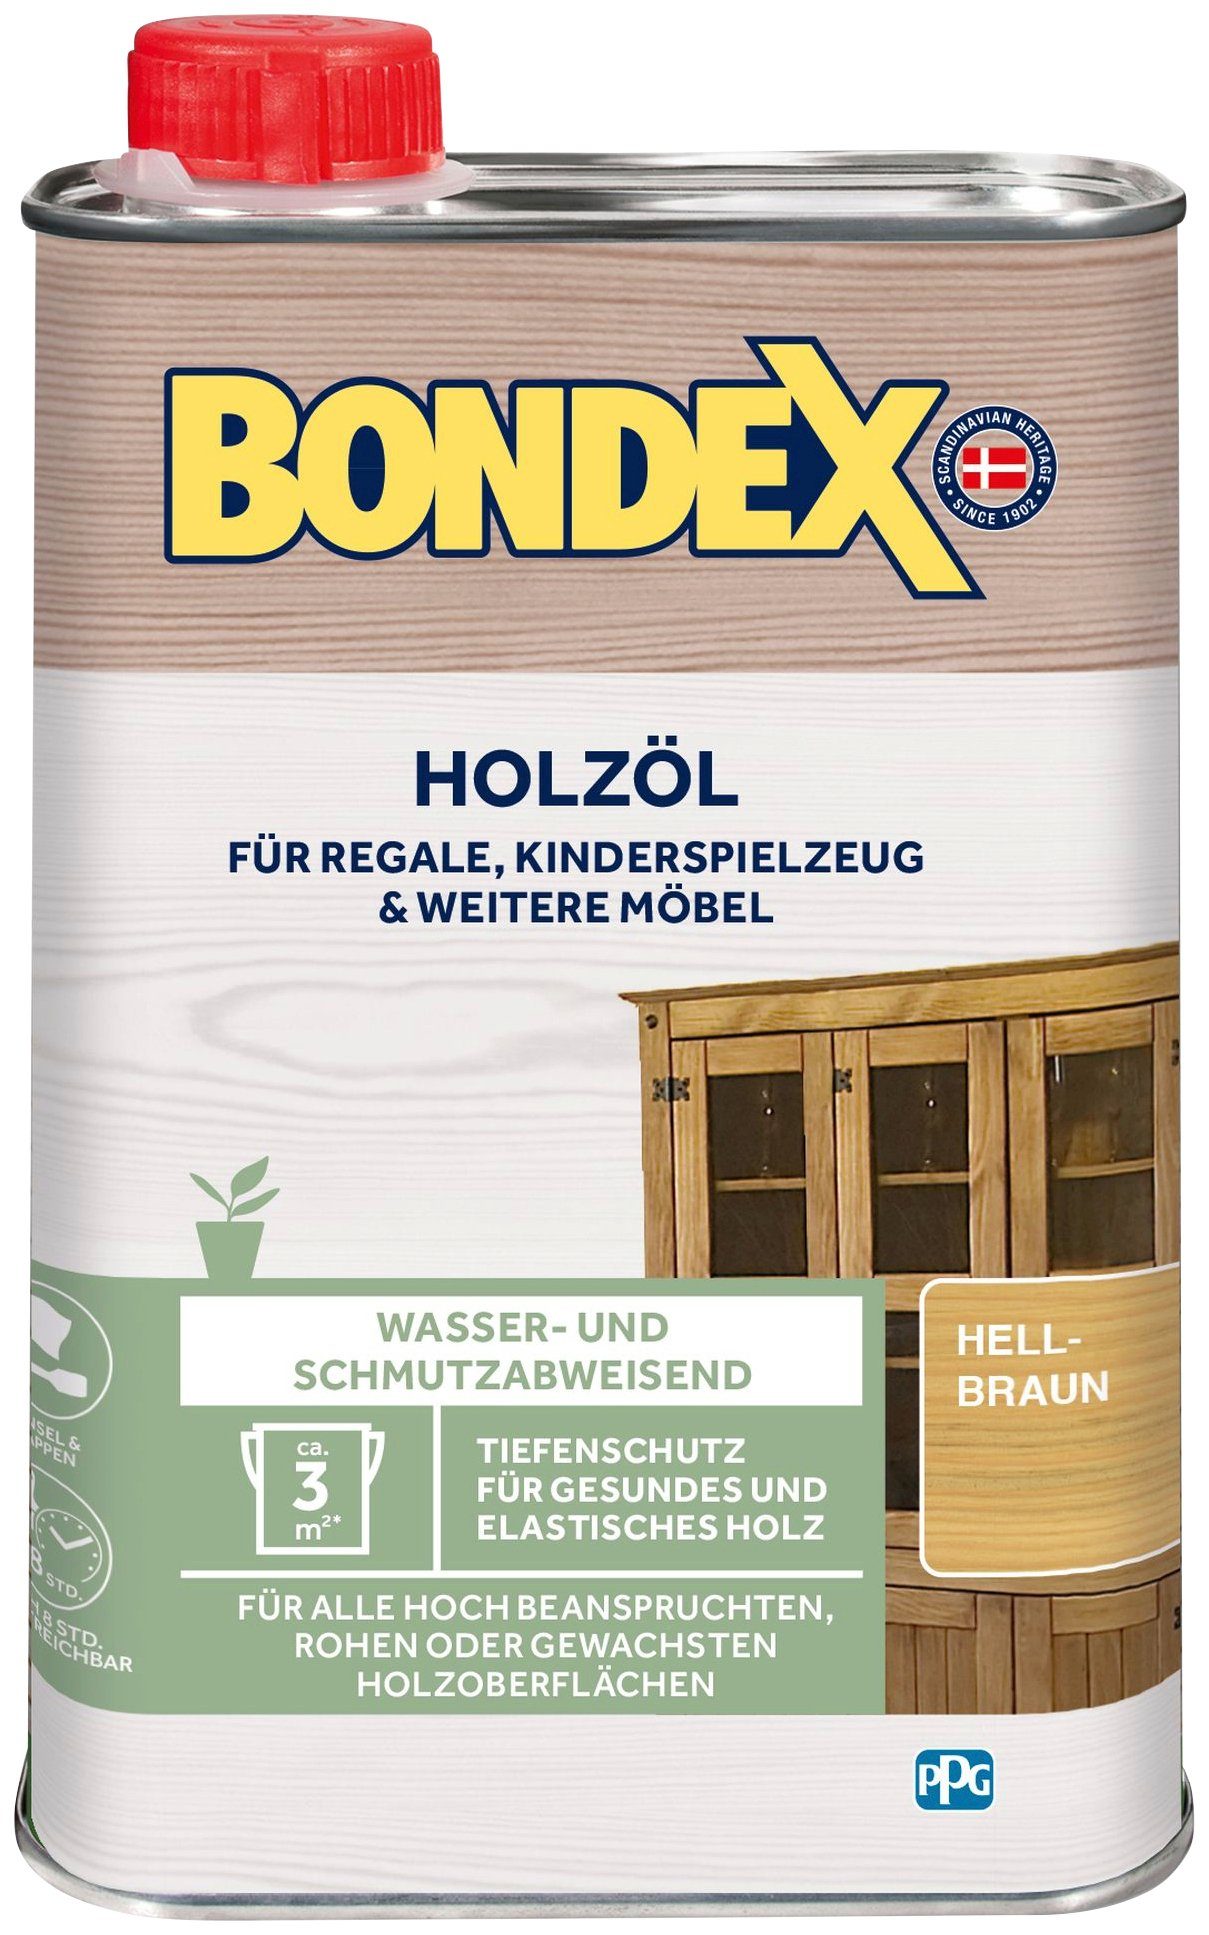 hellbraun Inhalt HOLZÖL, Holzöl Bondex Farblos, Liter 0,25